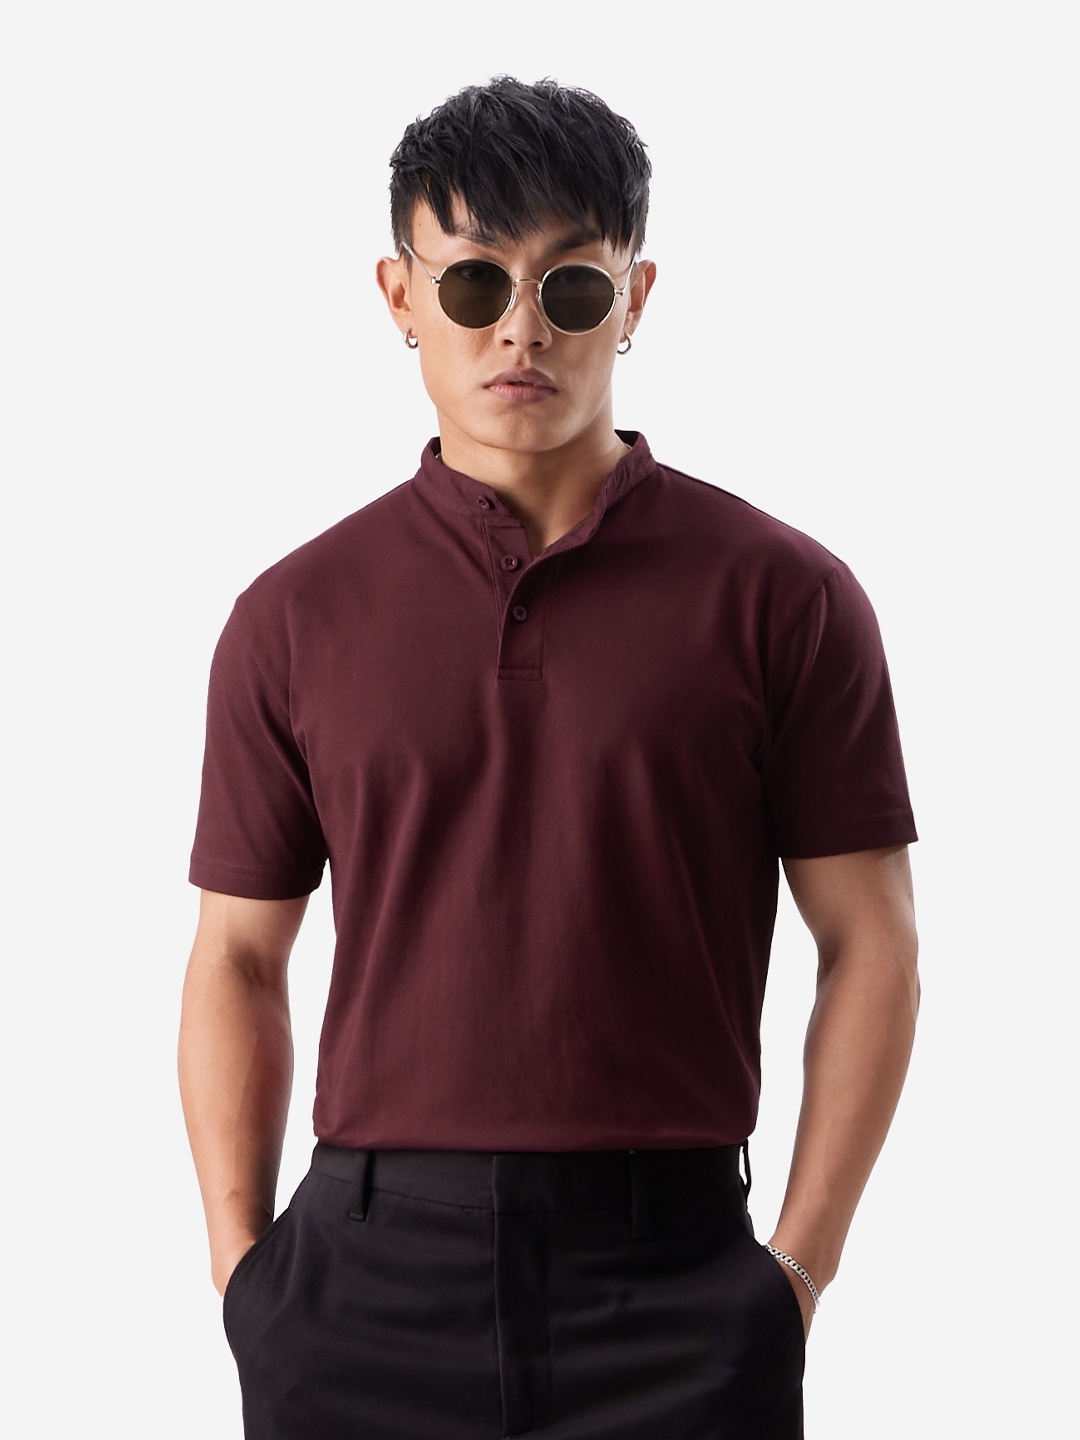 Men's Solids: Rich Maroon Mandarin Polo T-Shirt